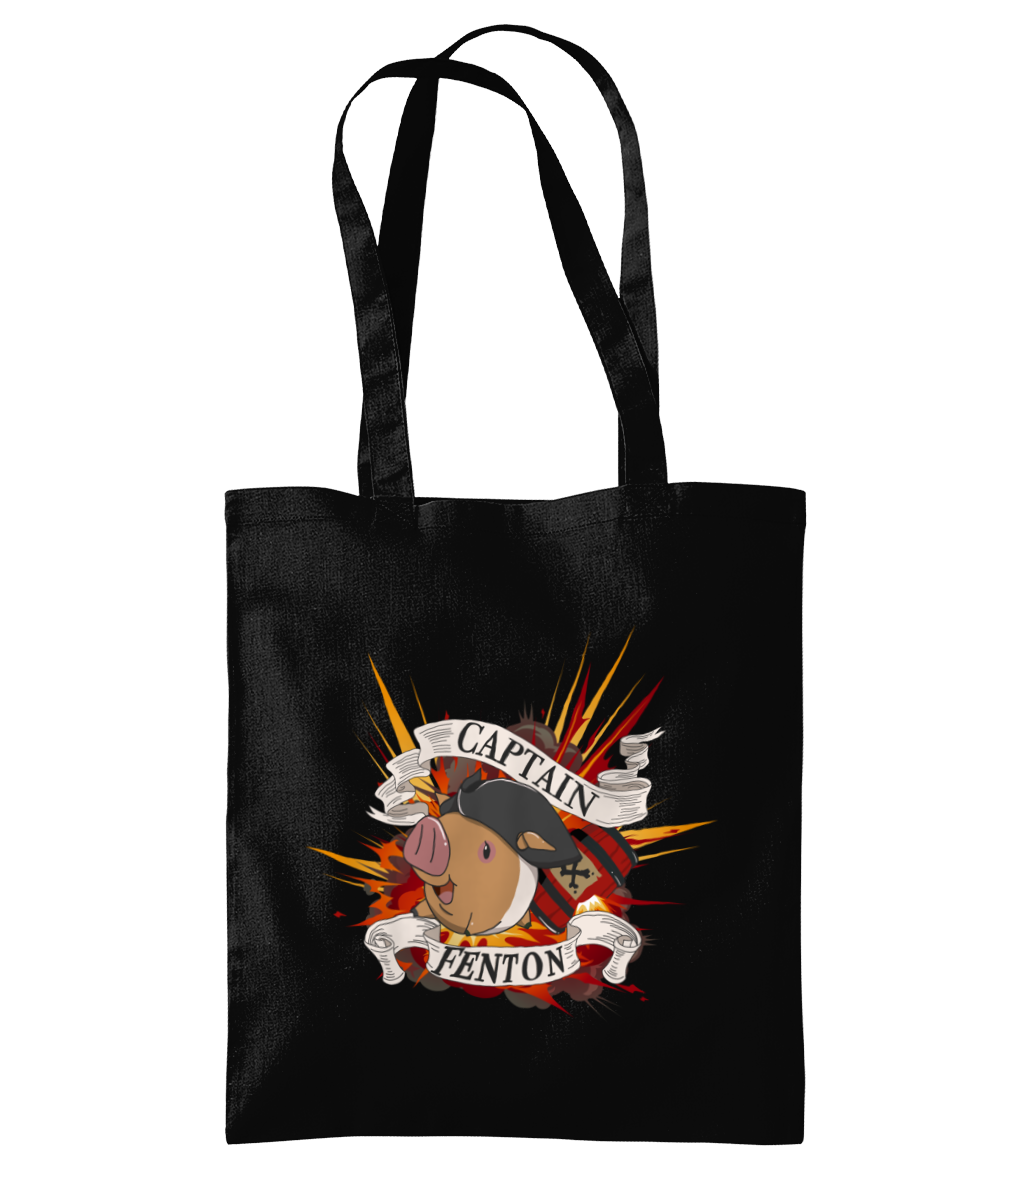 Rob Raven Promo Shoulder Tote Bag 'Captain Fenton Explosion'